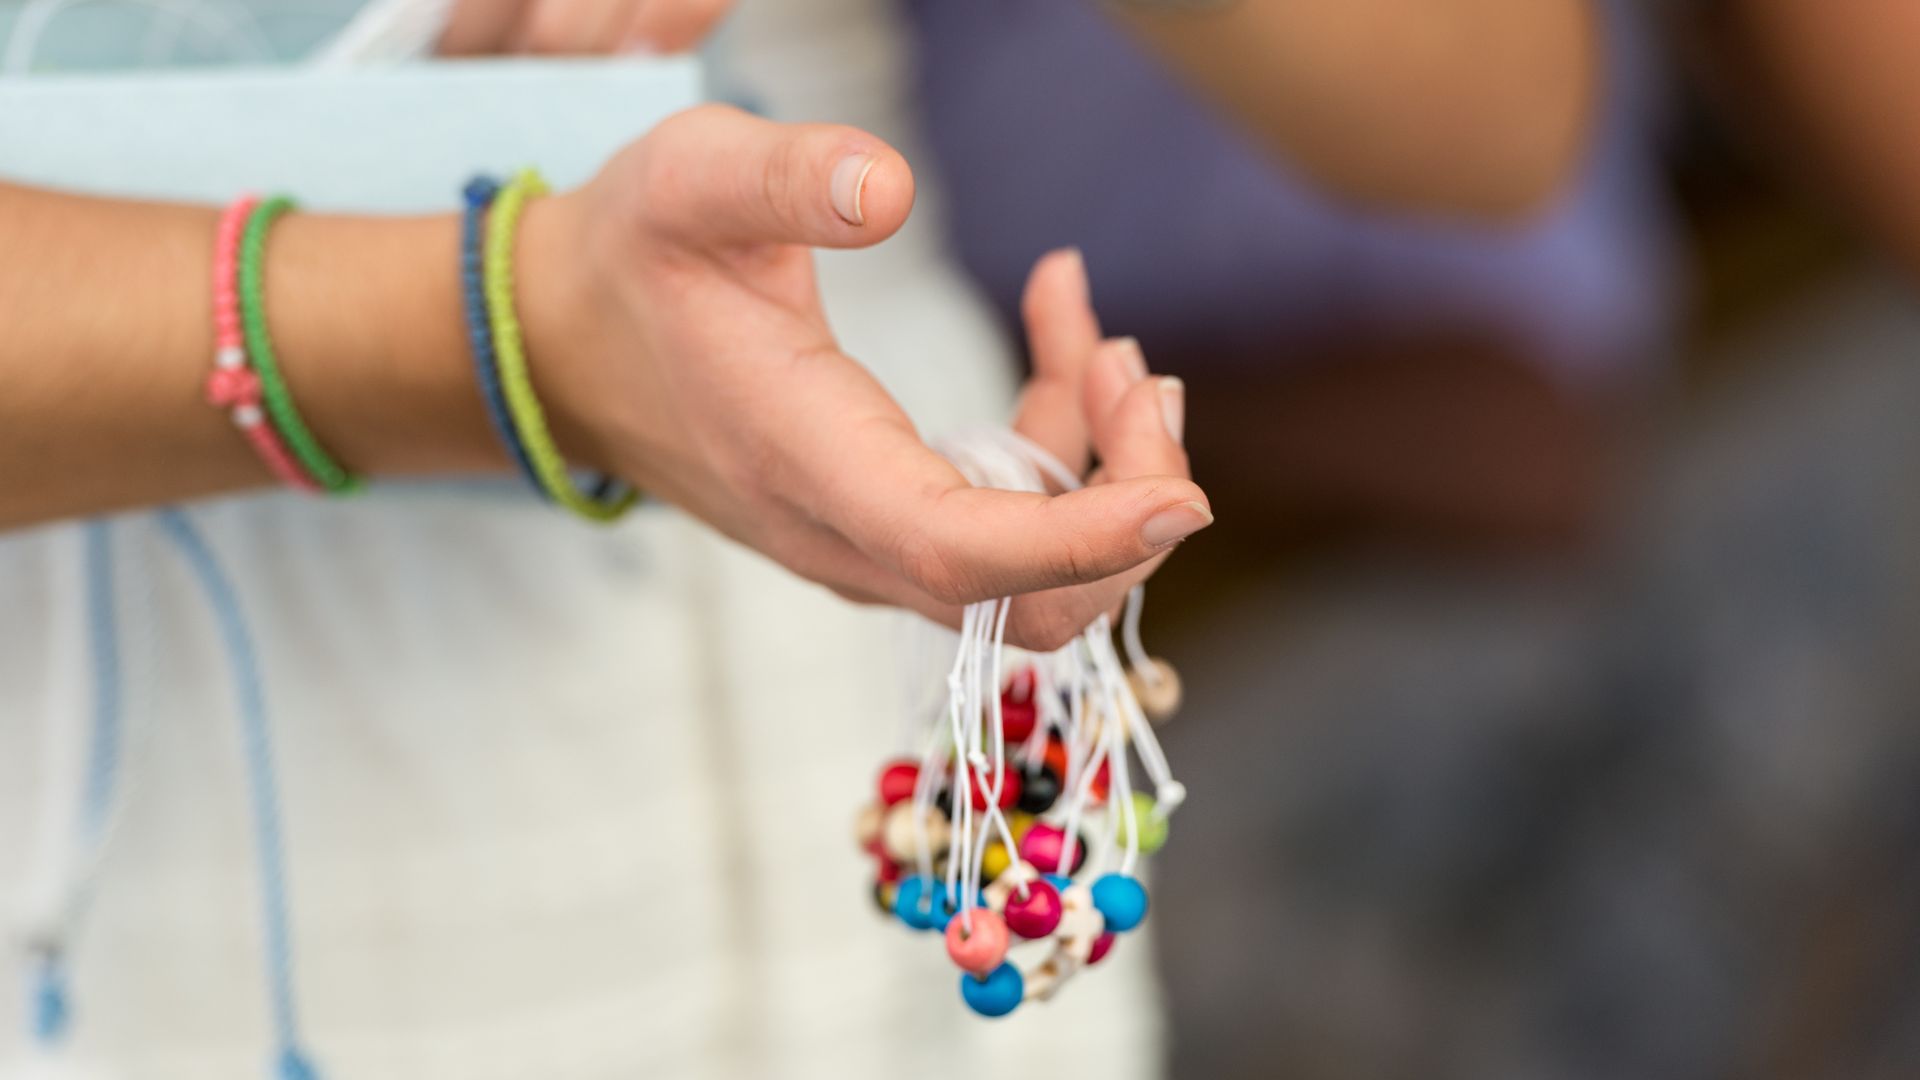 A close-up of a hand holding hand-made bracelets